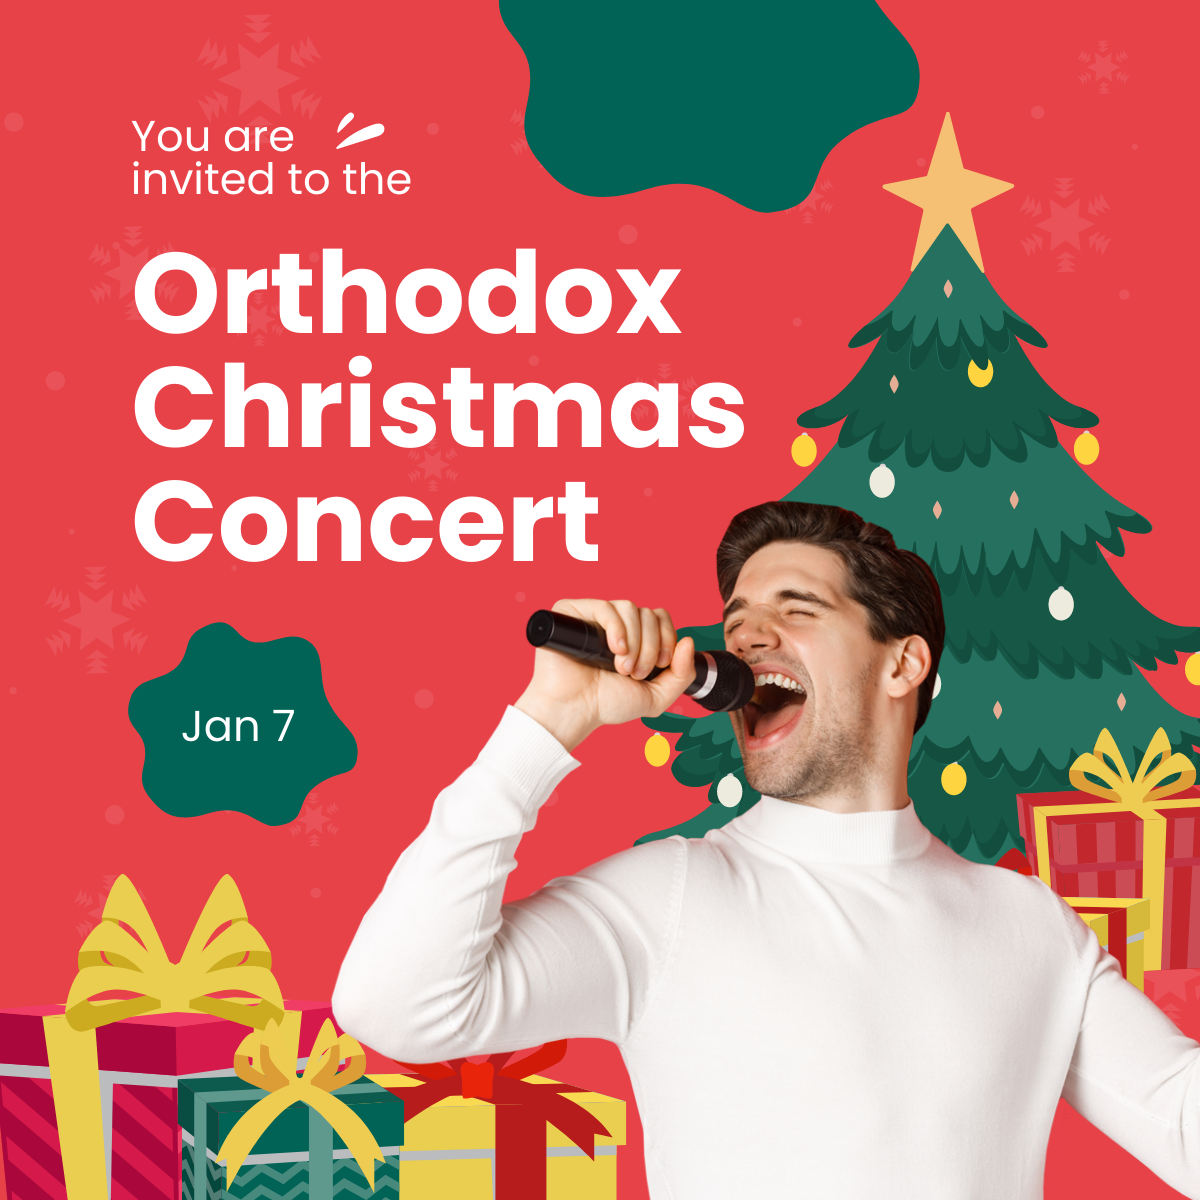 Orthodox Christmas Concert Linkedin Post